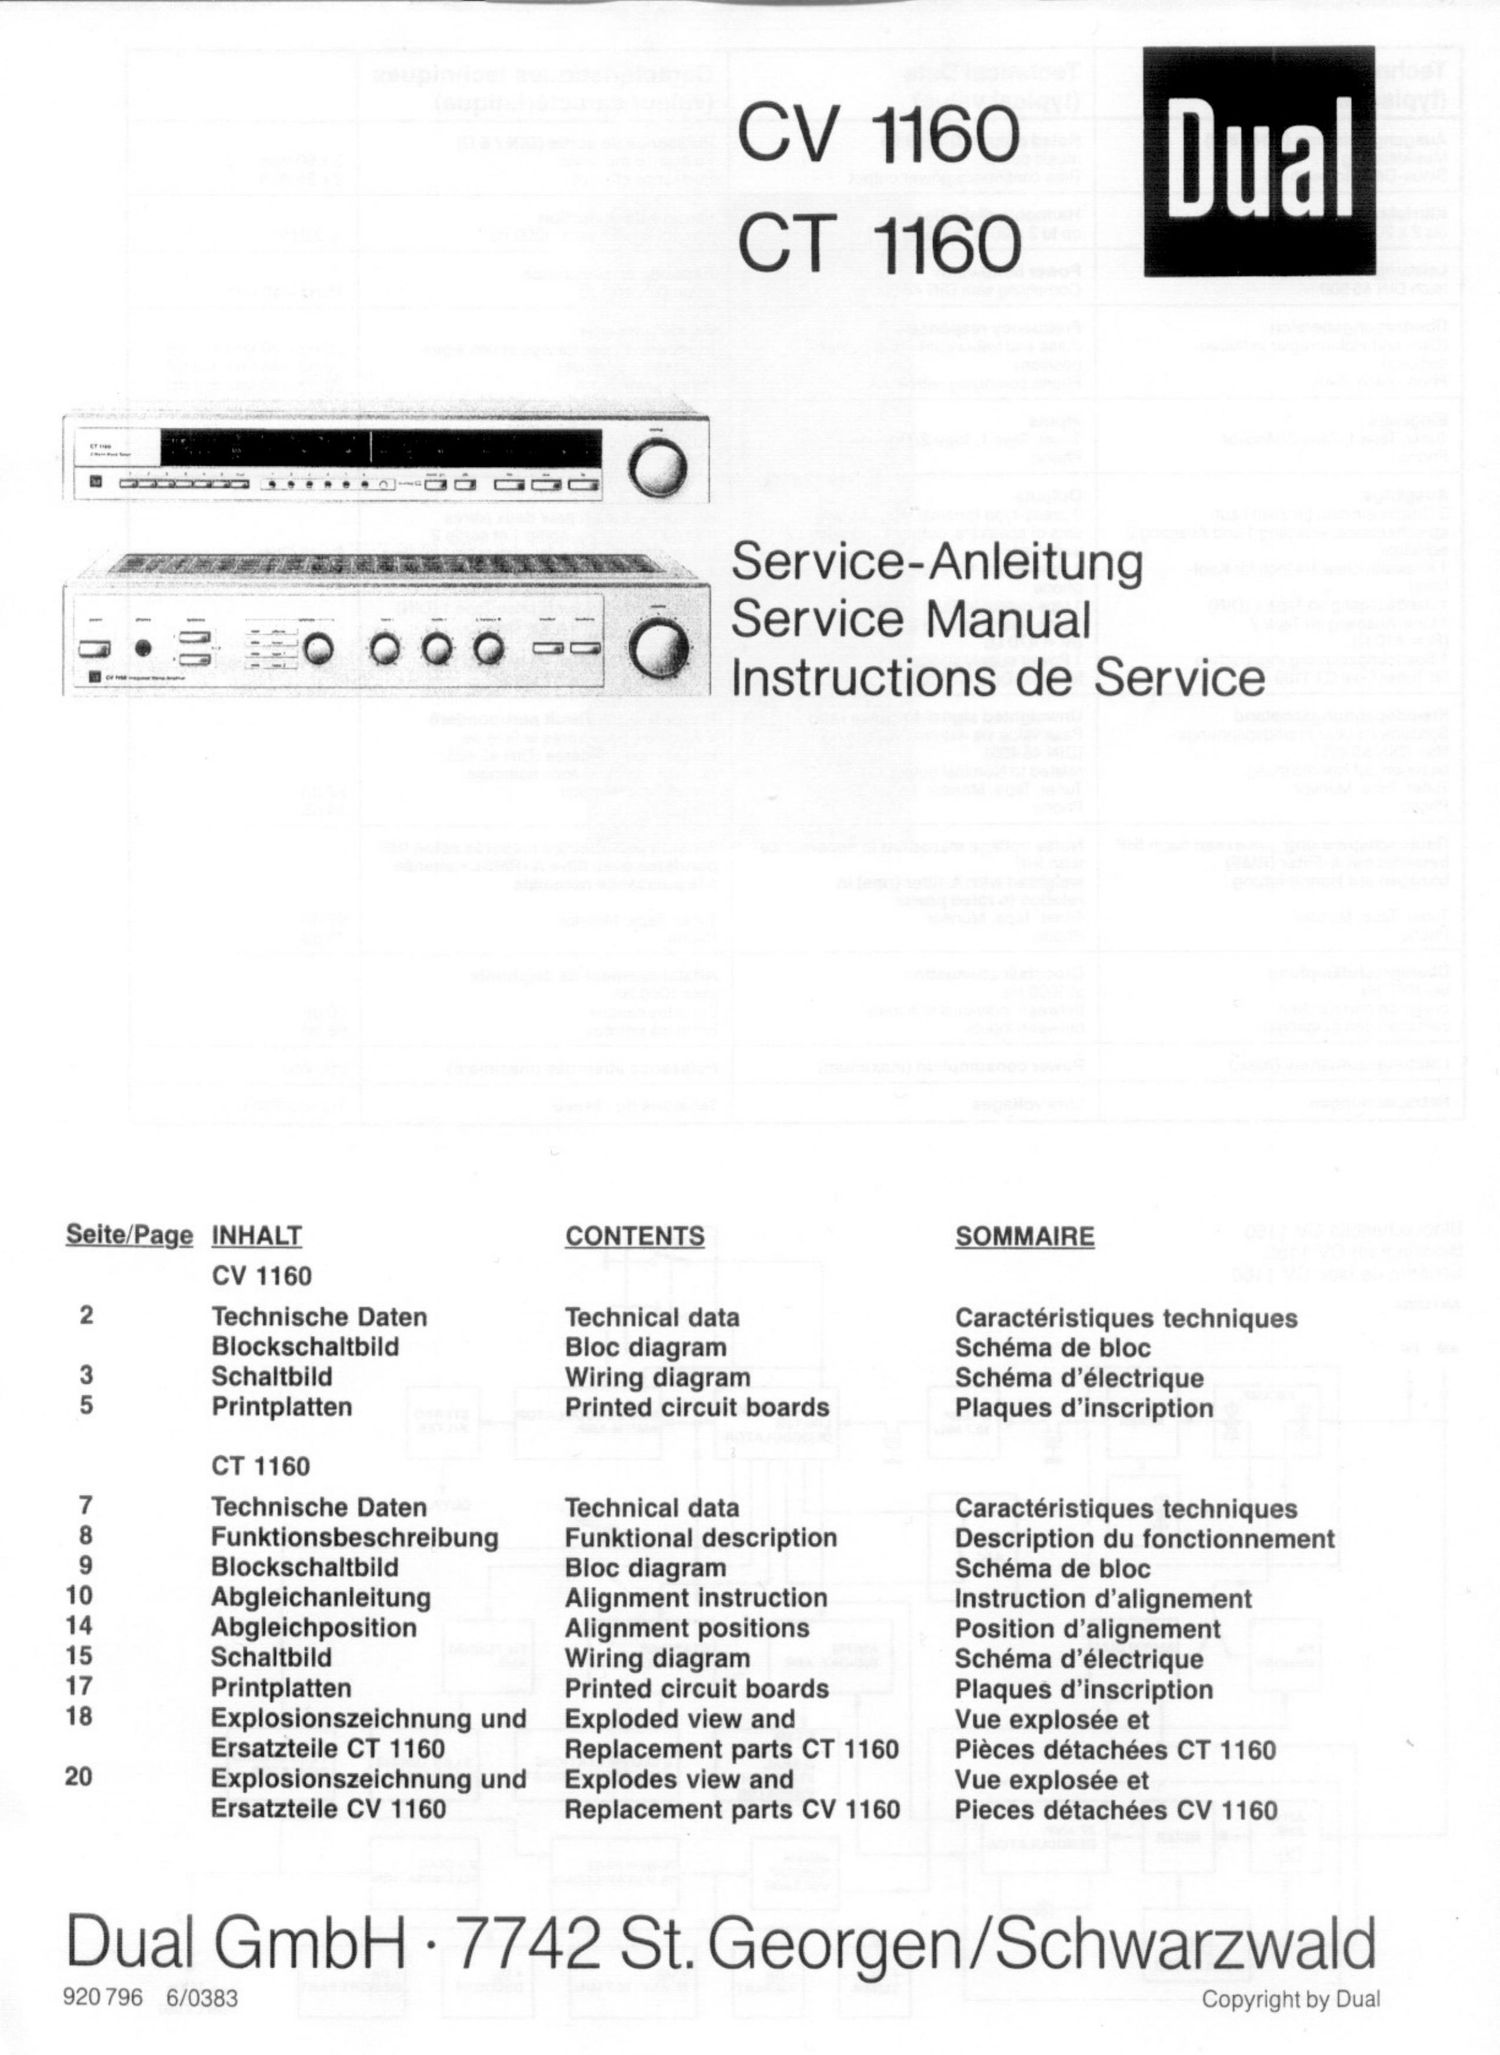 Dual CV 1160 CT 1160 Service Manual